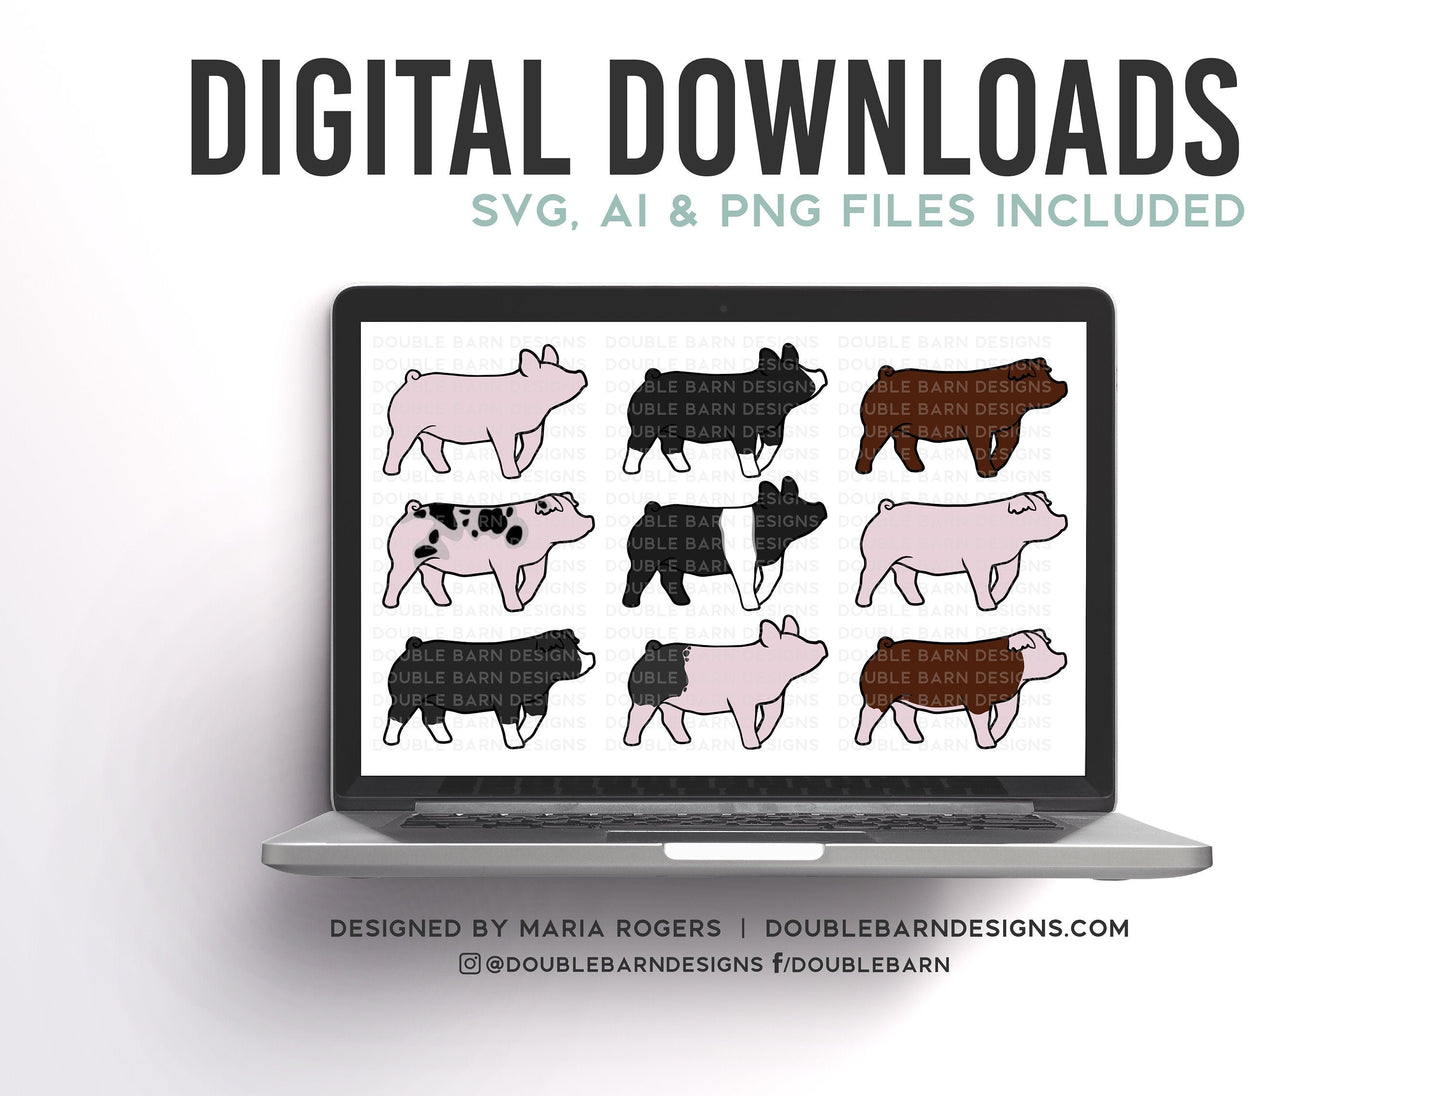 NEW 2021 Nine Show Pig Breeds | Digital Downloads - SVG, PNG, Ai Files | Commercial License | York, Cross, Hamp, Berk, Spot, Duroc, Etc.